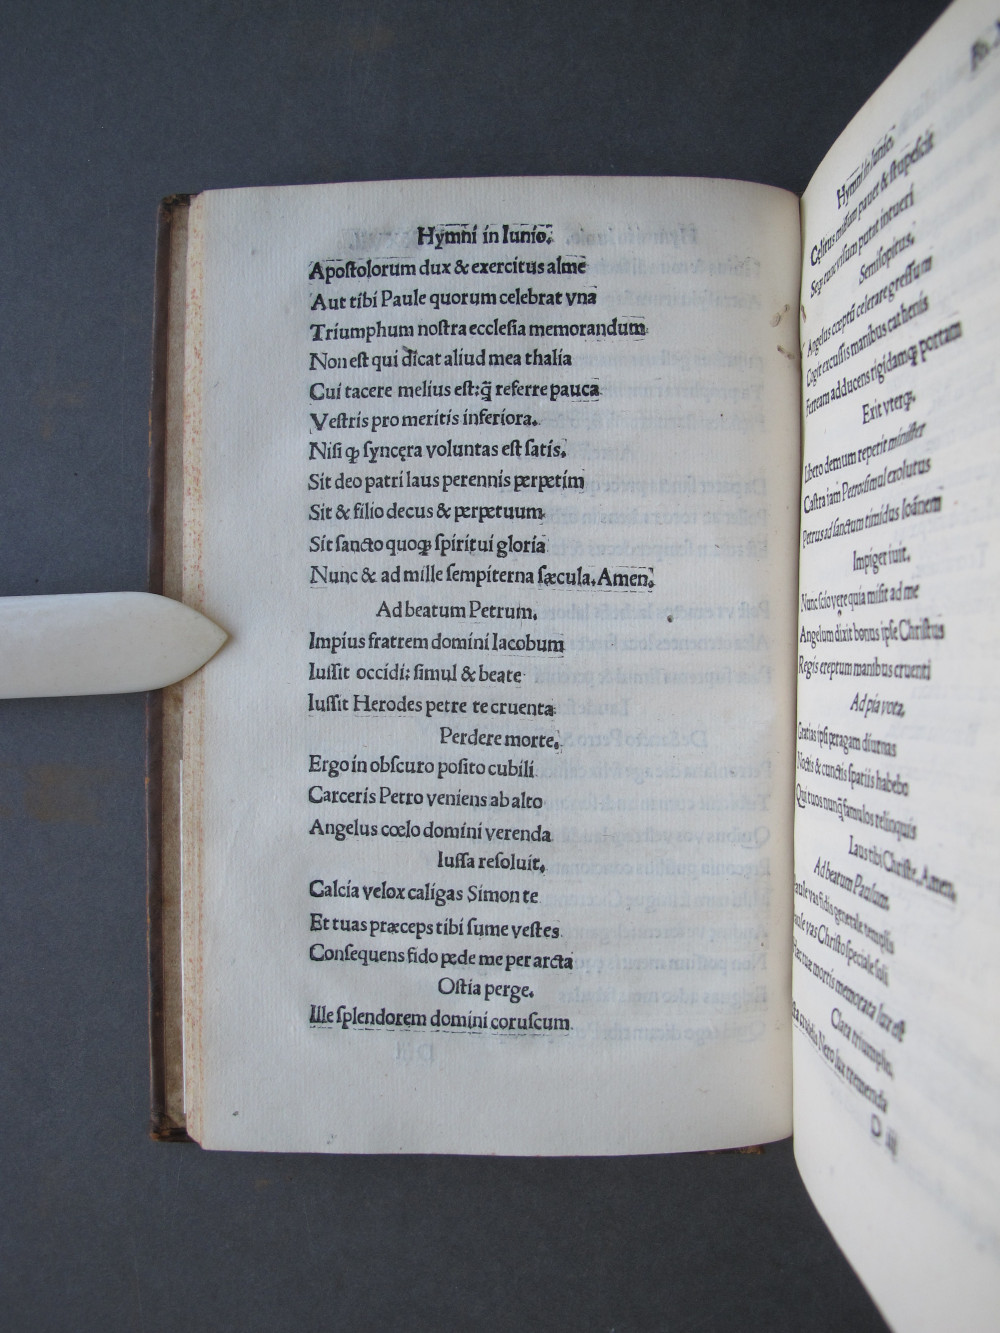 Folio 27 verso